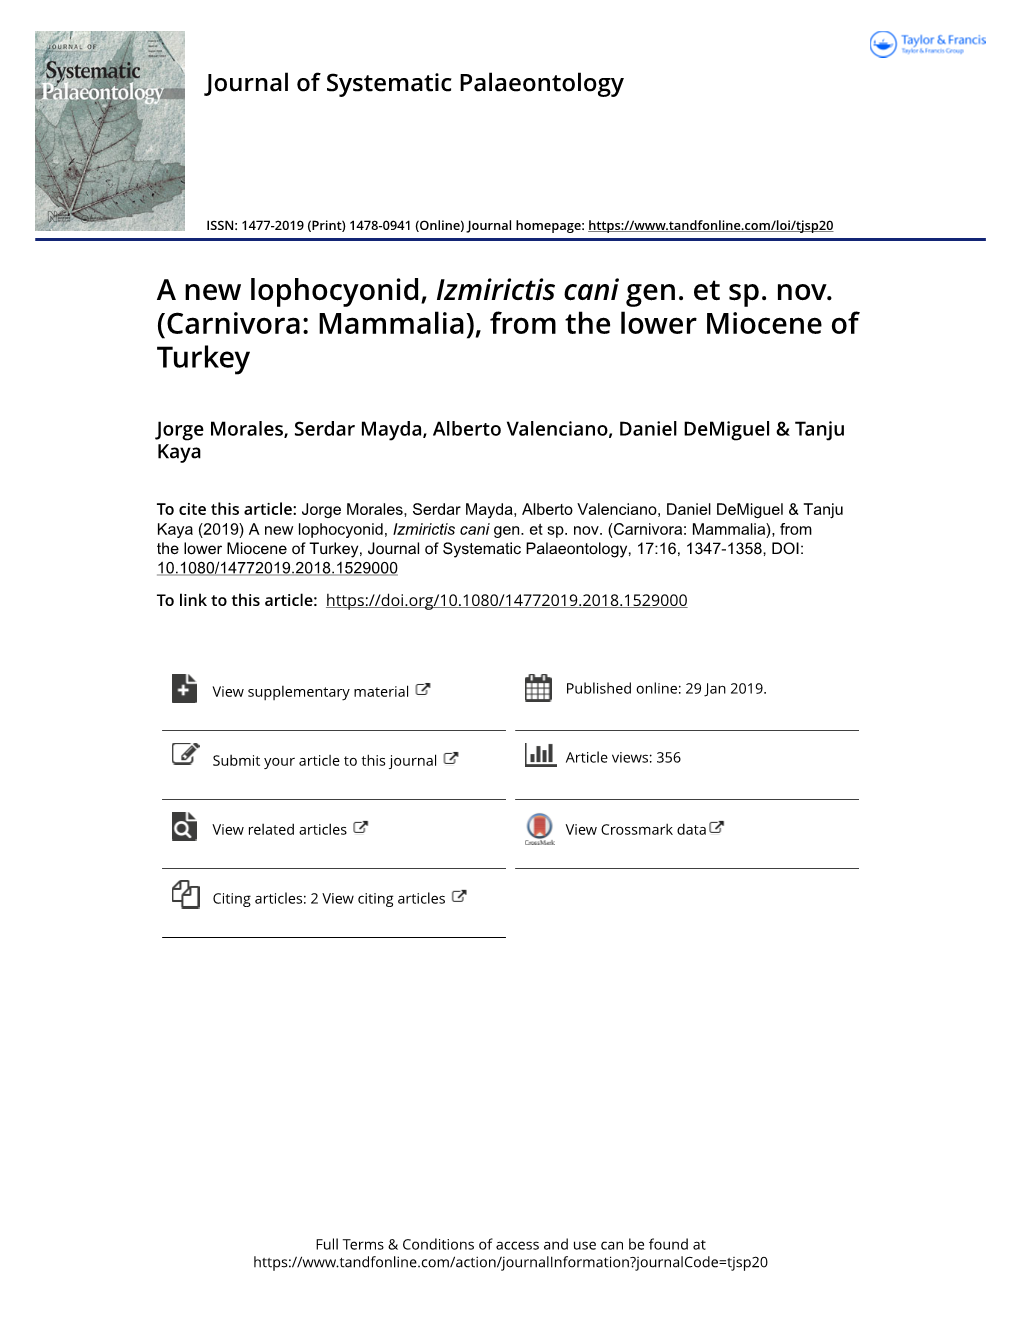 A New Lophocyonid, Izmirictis Cani Gen. Et Sp. Nov. (Carnivora: Mammalia), from the Lower Miocene of Turkey